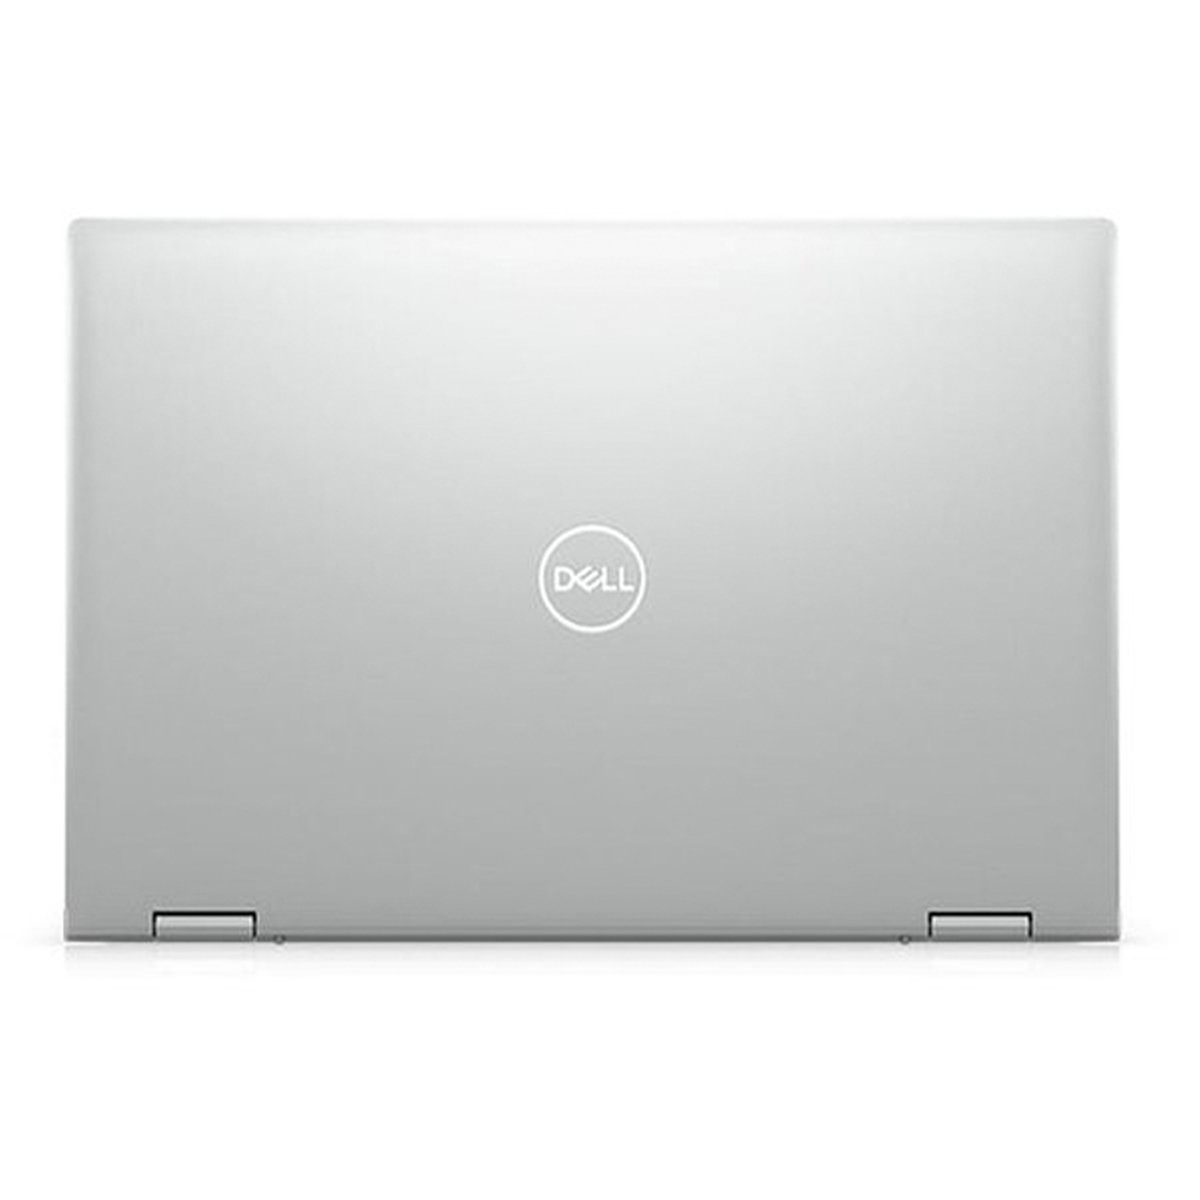 Dell Inspiron 14 5406-INS-6006B 2 in 1 Laptop,Intel® Core i7-1165G7Processor ,16GB RAM,512GB SSD,Windows10,14.0inch,Grey